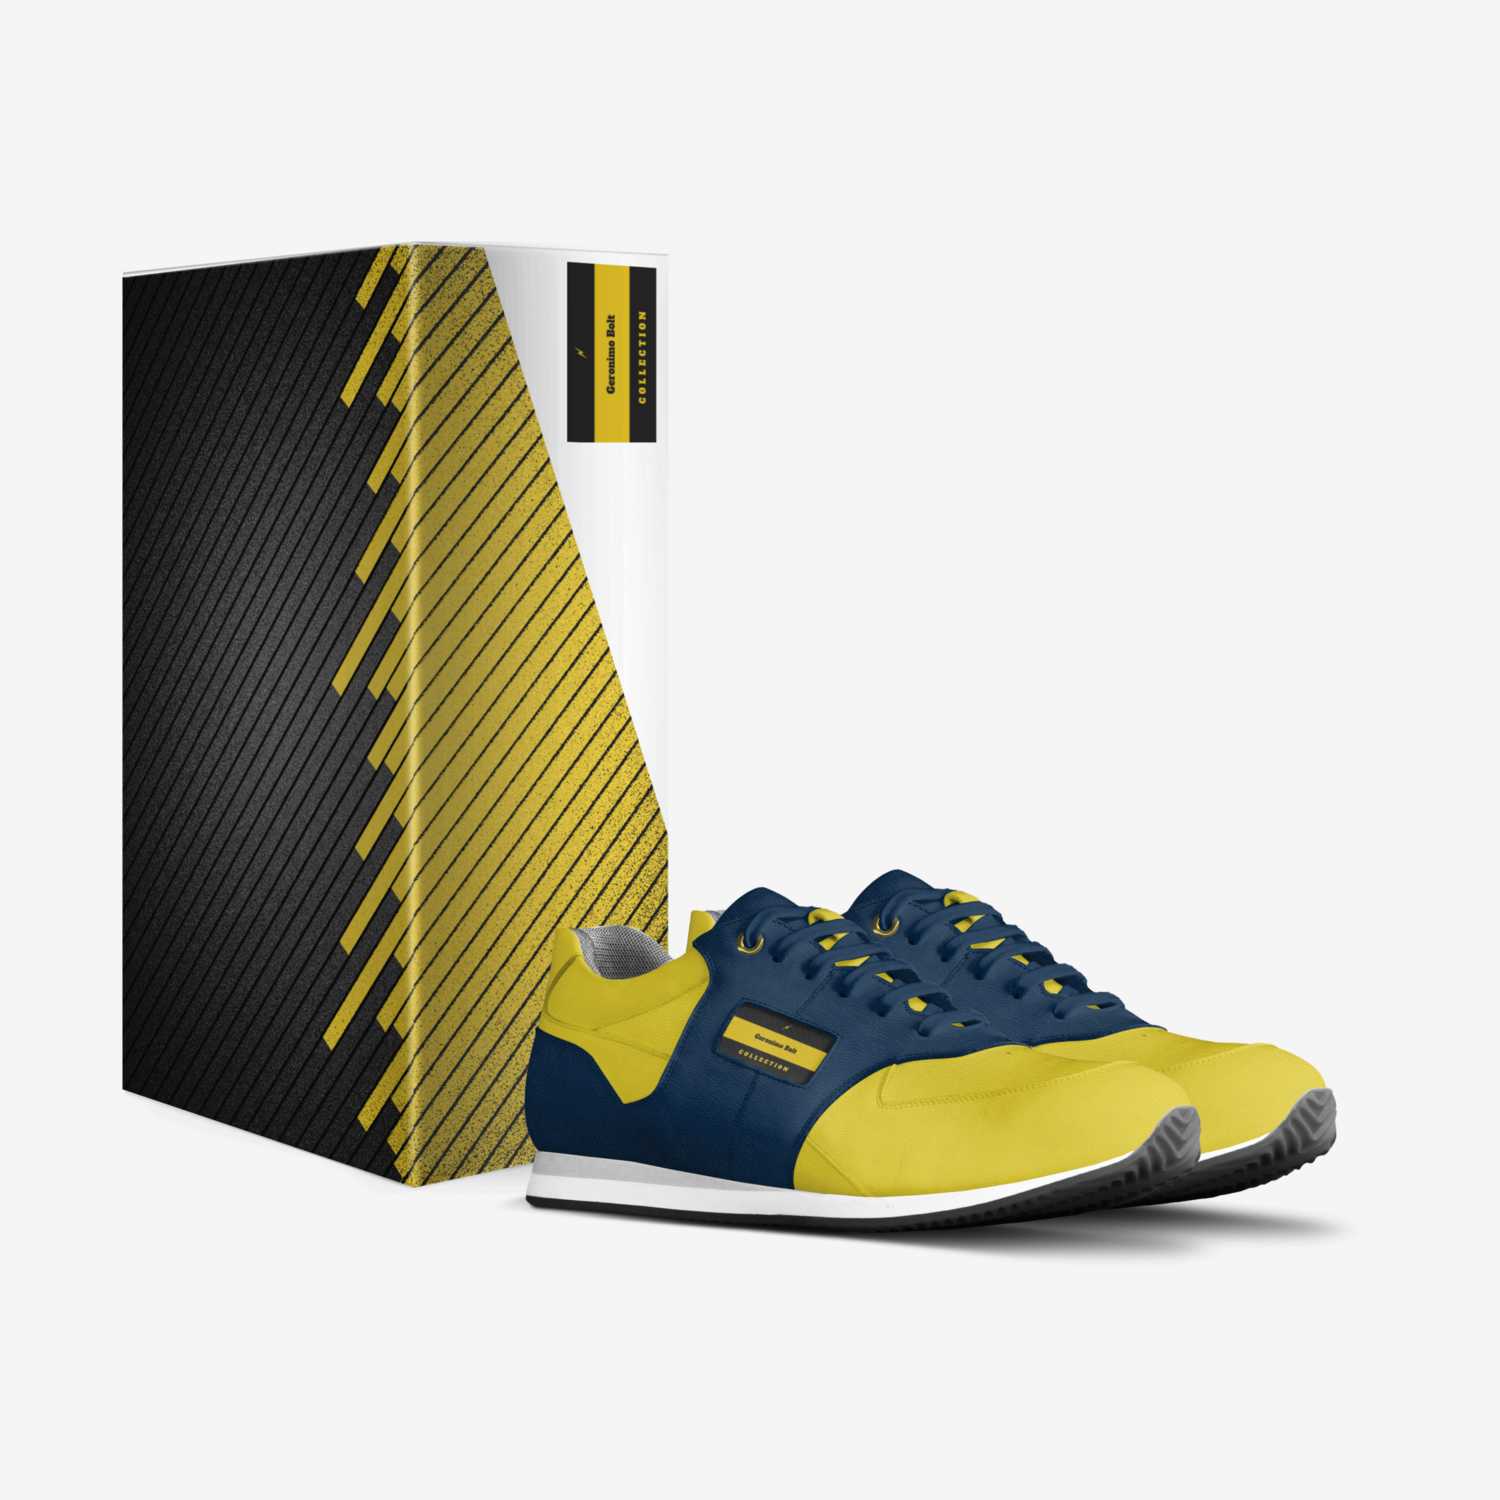 Geronimo Bolt custom made in Italy shoes by Zachary Carman | Box view